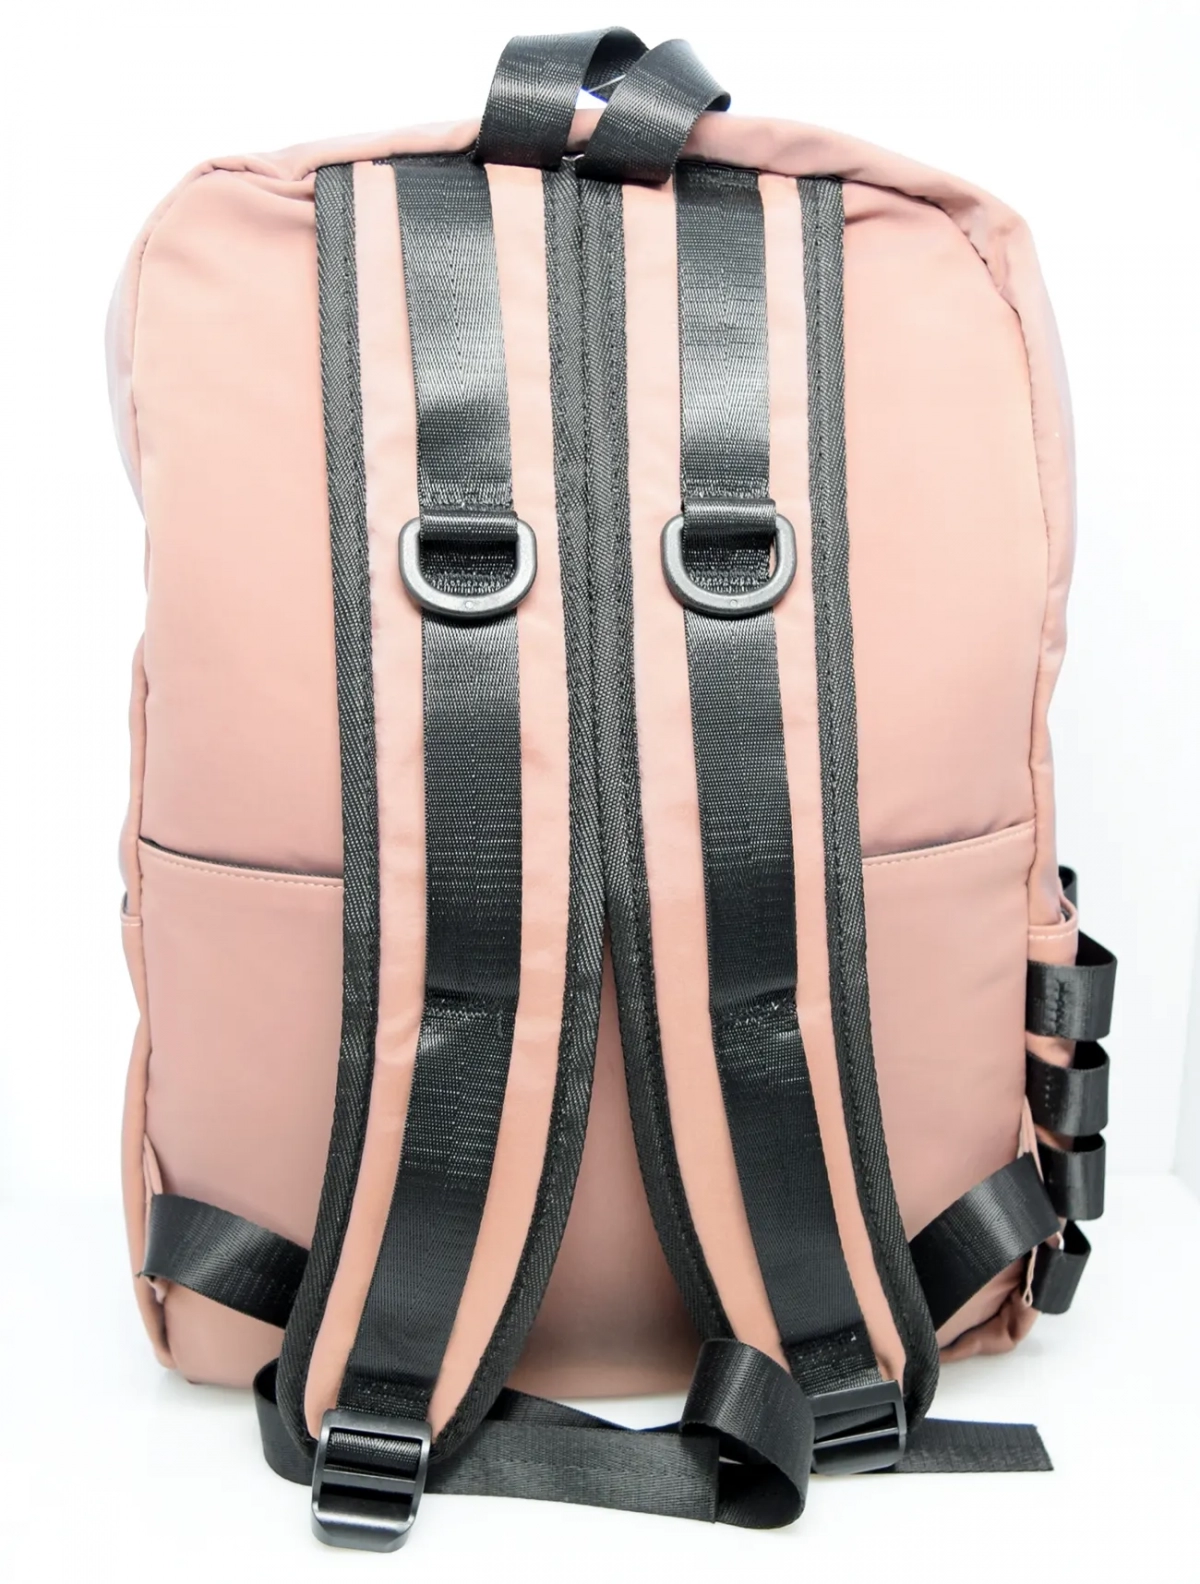 Рюкзак D2091 рюкзак розовый